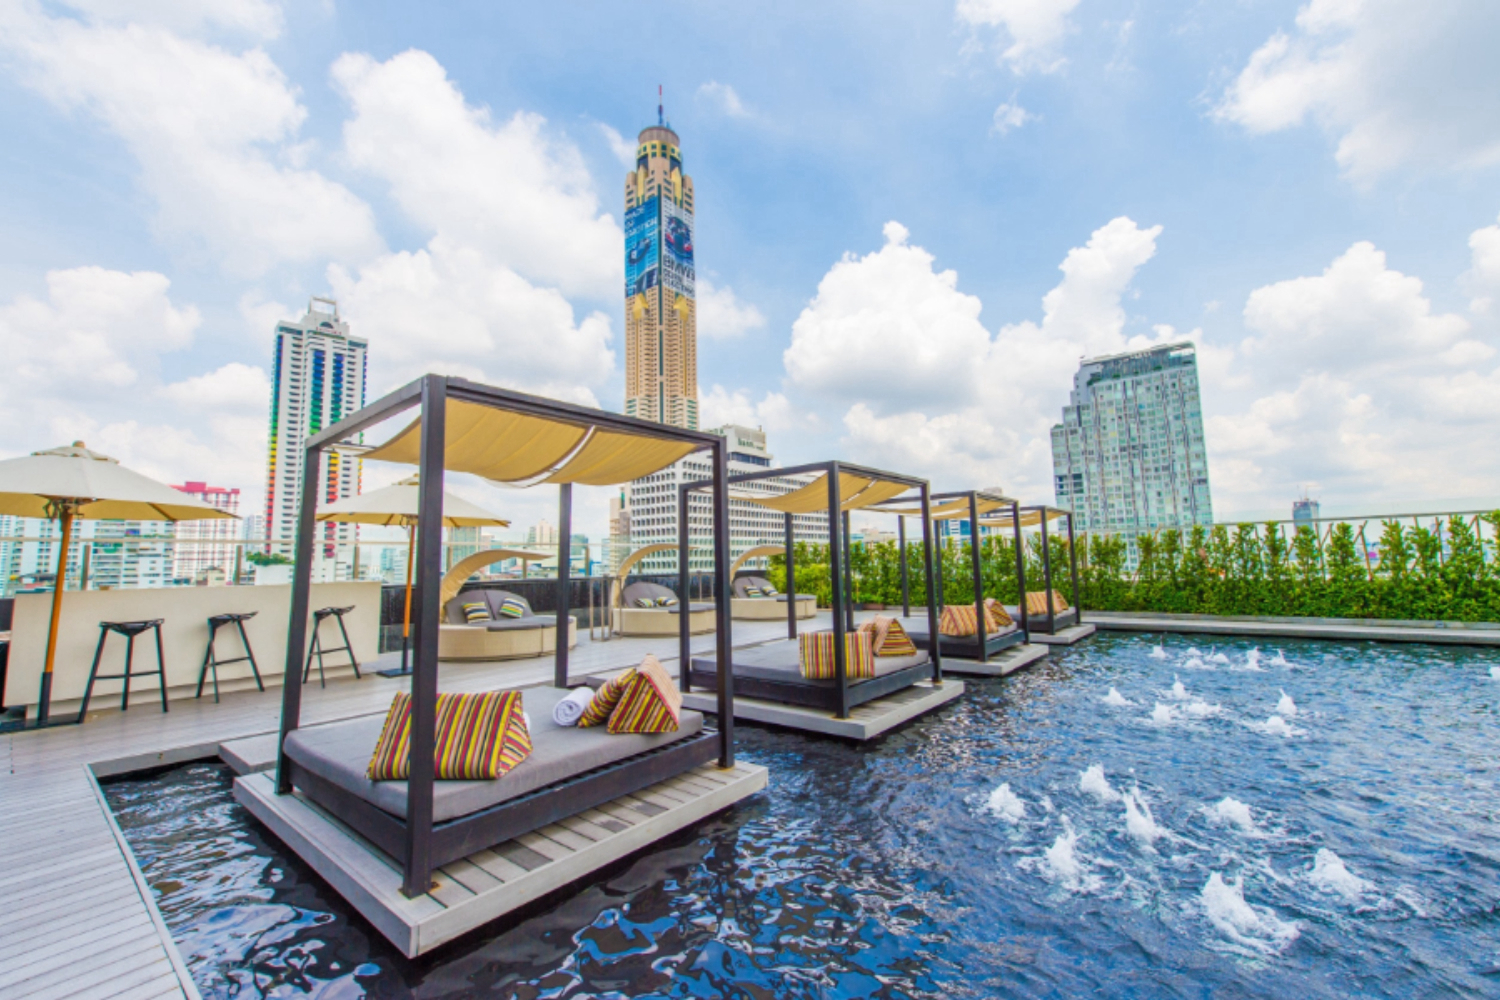 Centara Watergate Pavillion Hotel Bangkok - Image 1